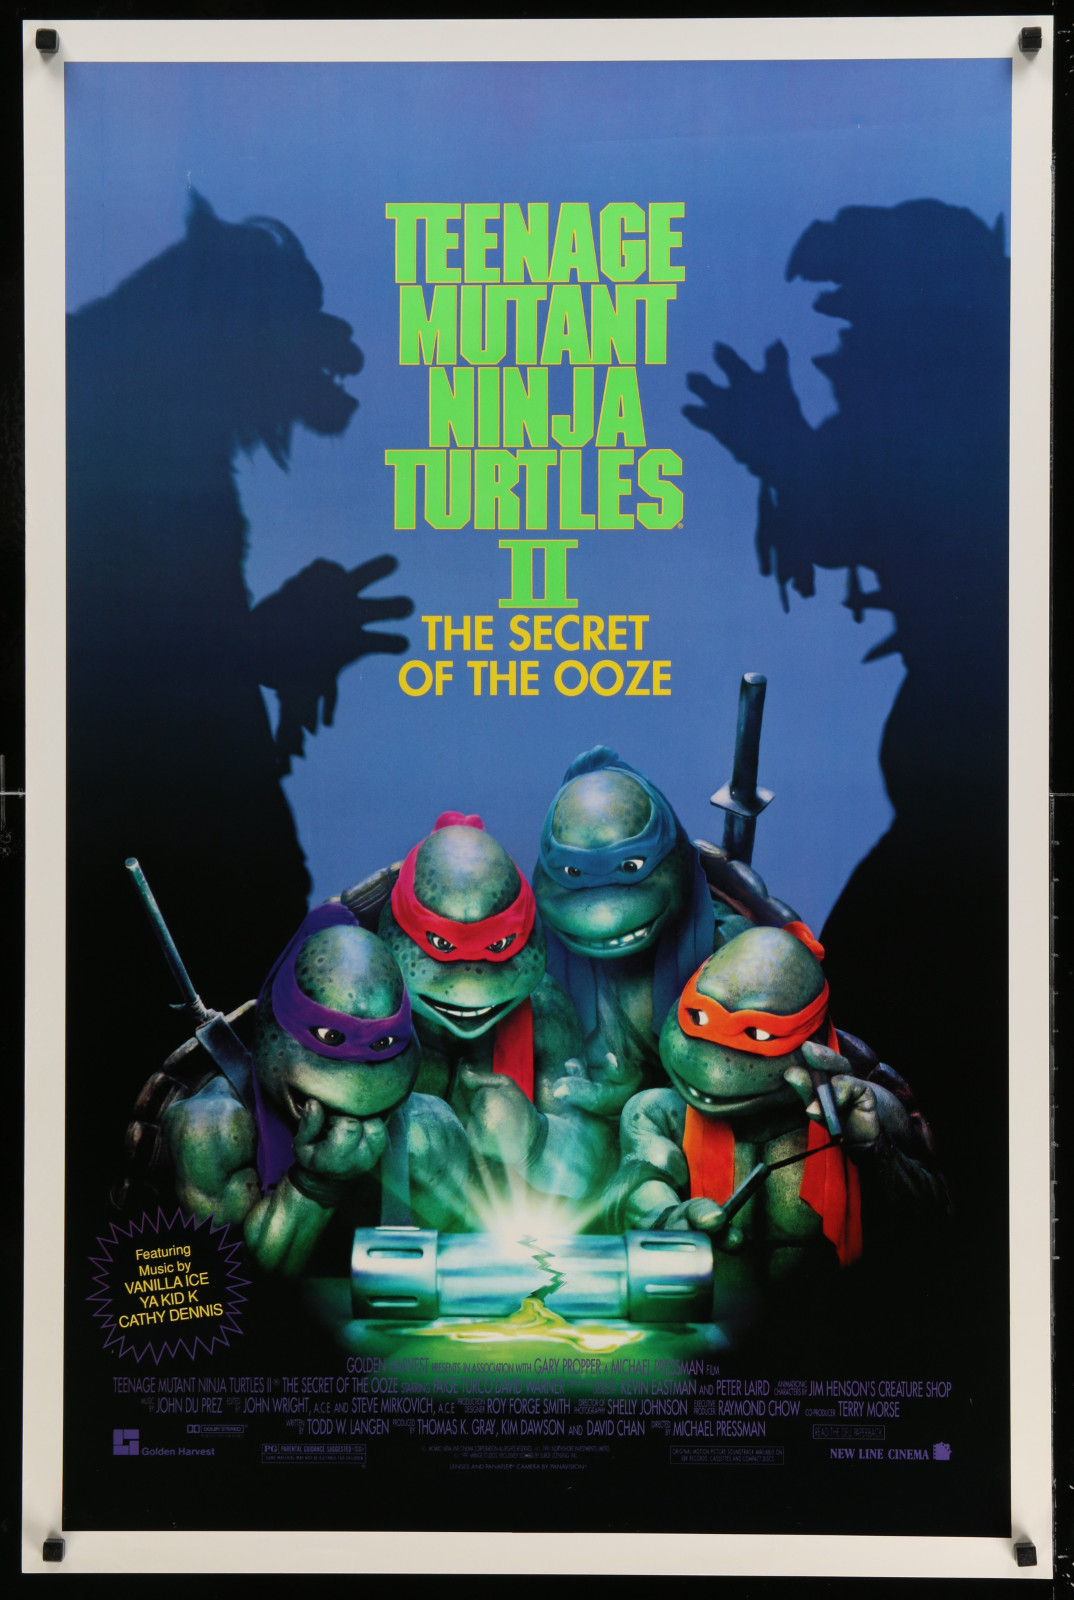 Teenage Mutant Ninja Turtles 2 Poster Movie Art Silk Poster 13x18 24x32 in J817 